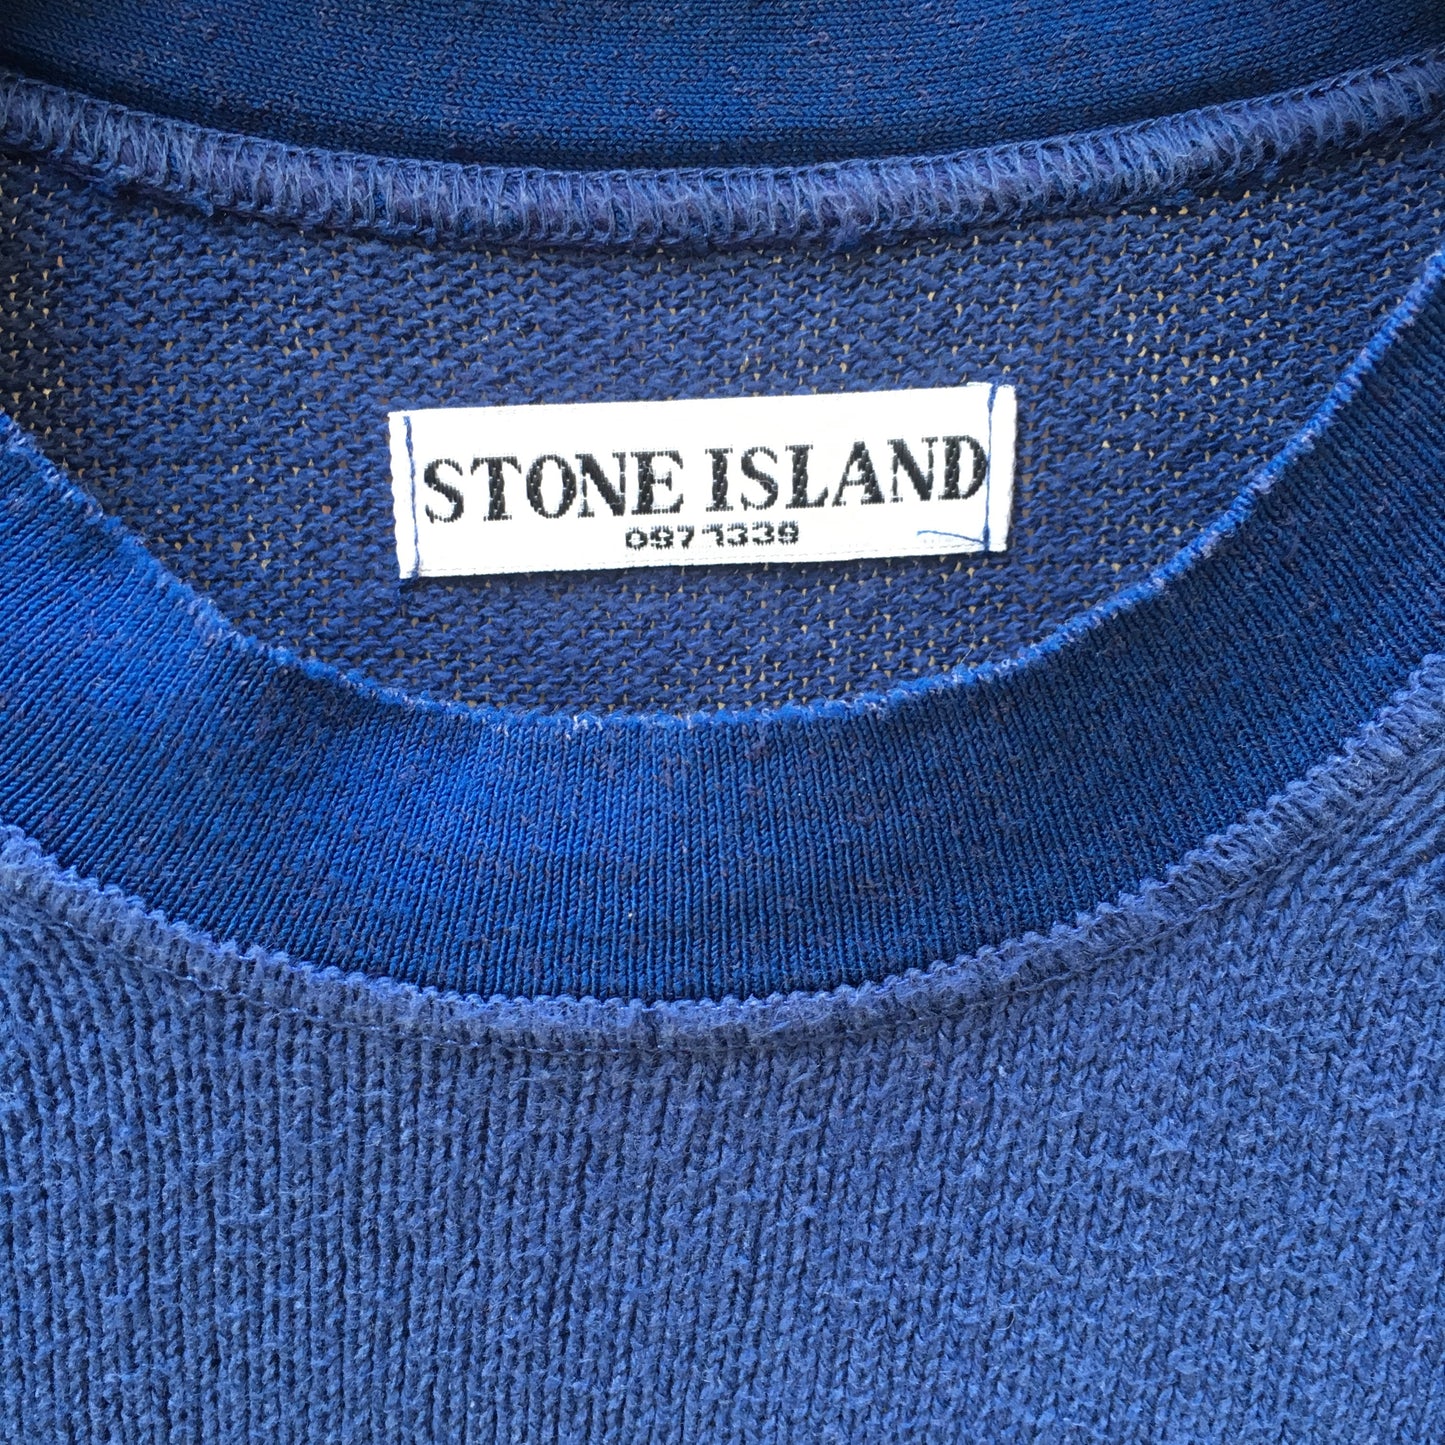 Stone Island SS 2007 Crew Neck Sweater - L/XL